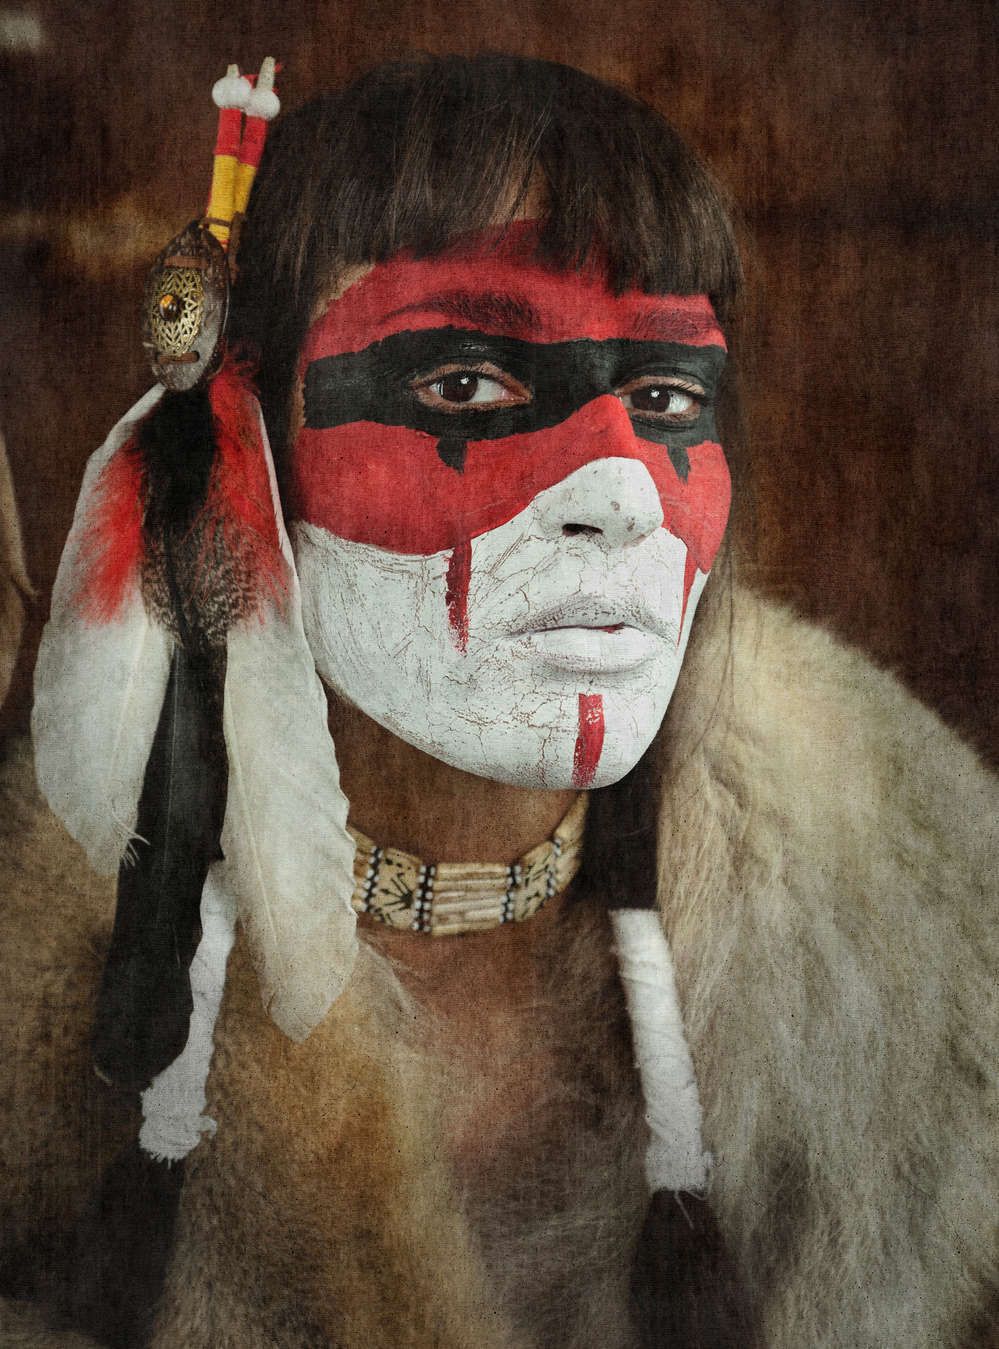             Fotomural »ayasha« - Retrato de un guerrero - motivo con estructura de tapiz | Tela no tejida de textura ligera
        